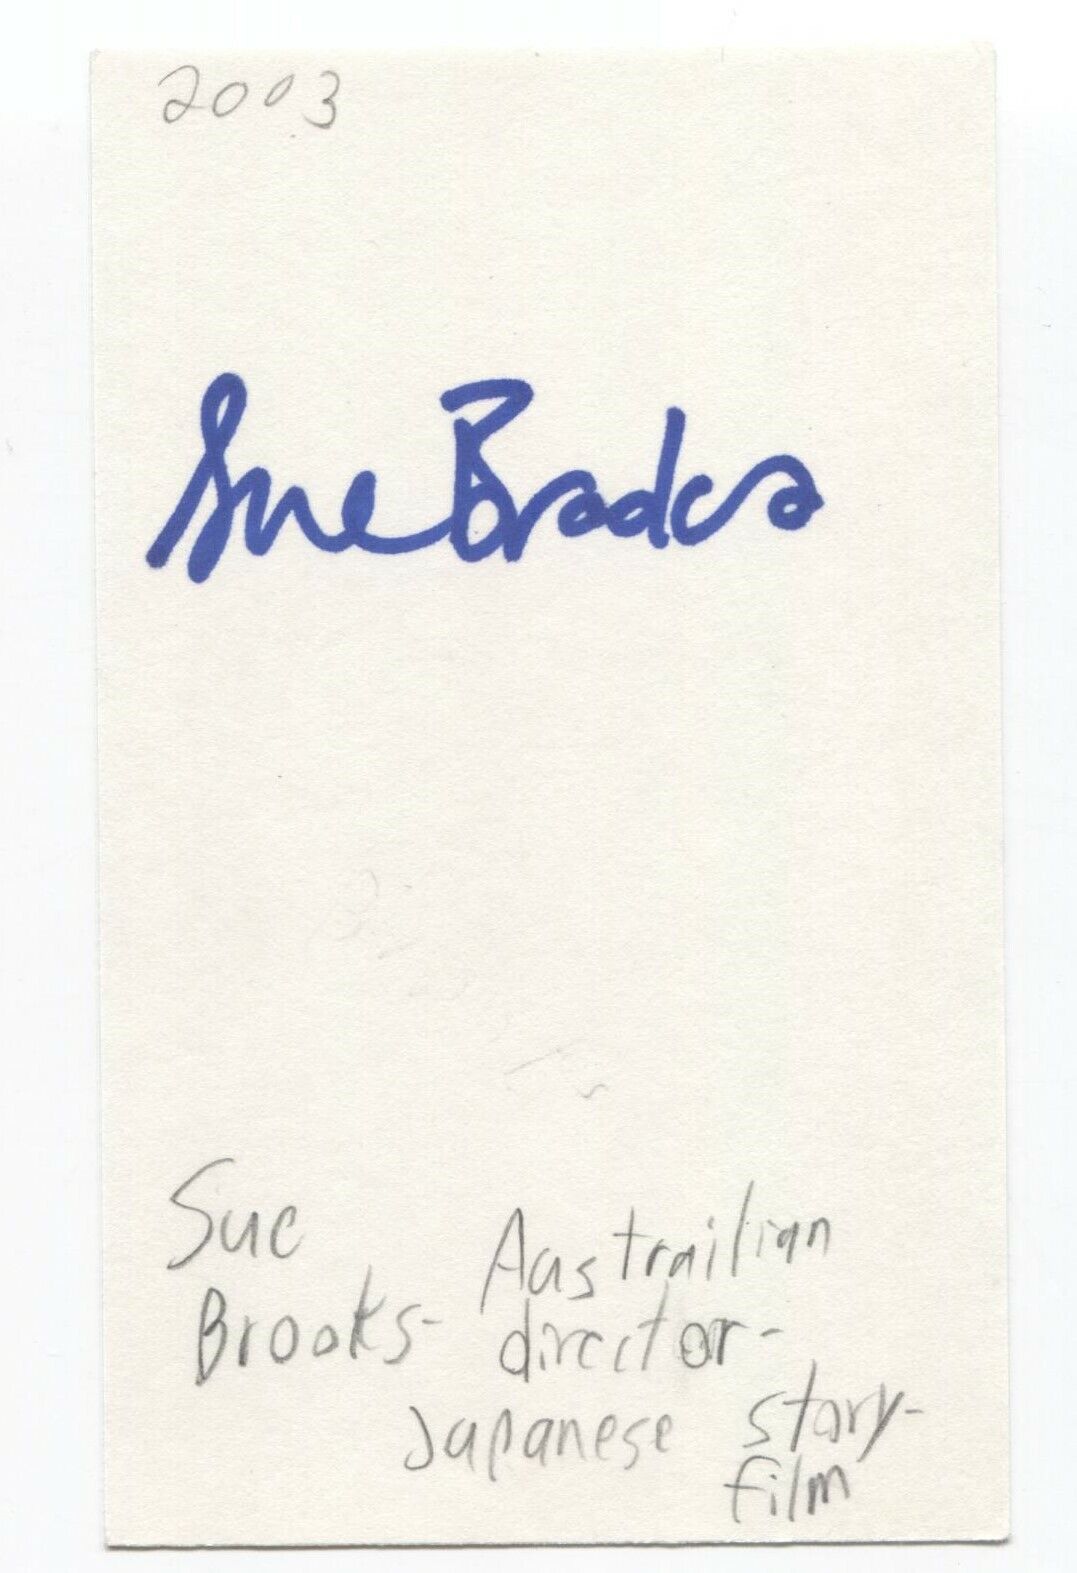 Sue Brooks Signed 3x5 Index Card Autographed Signature Australian Film Director